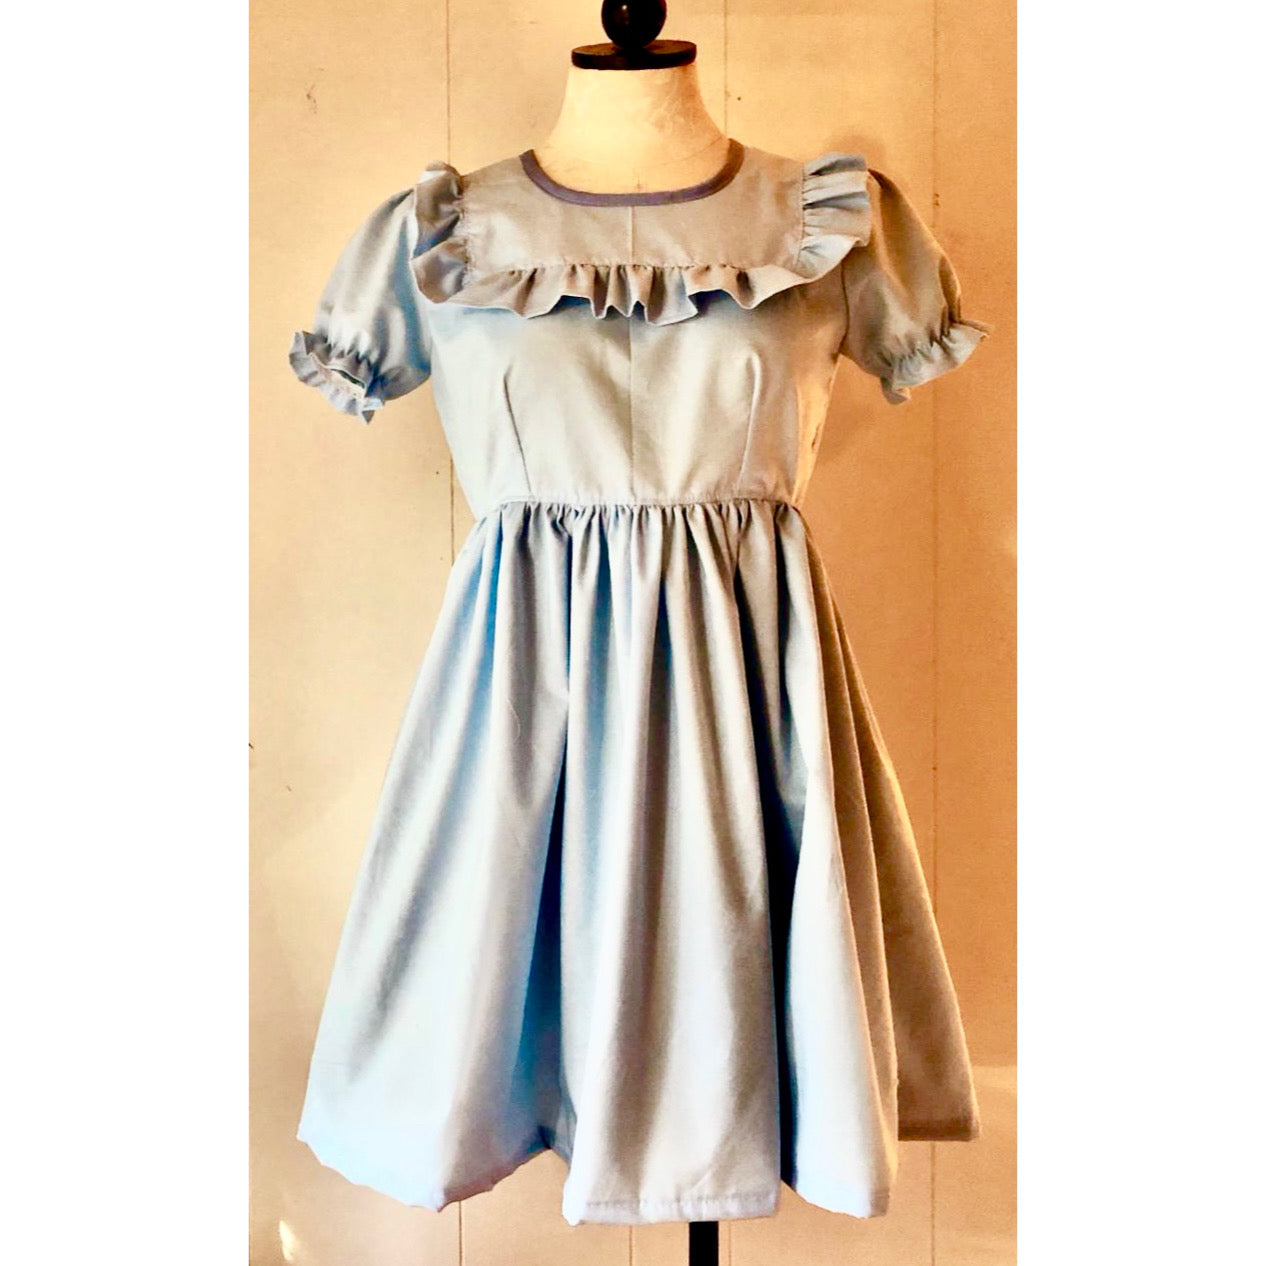 The Short Sleeve Savannah Dress in Baby Blue